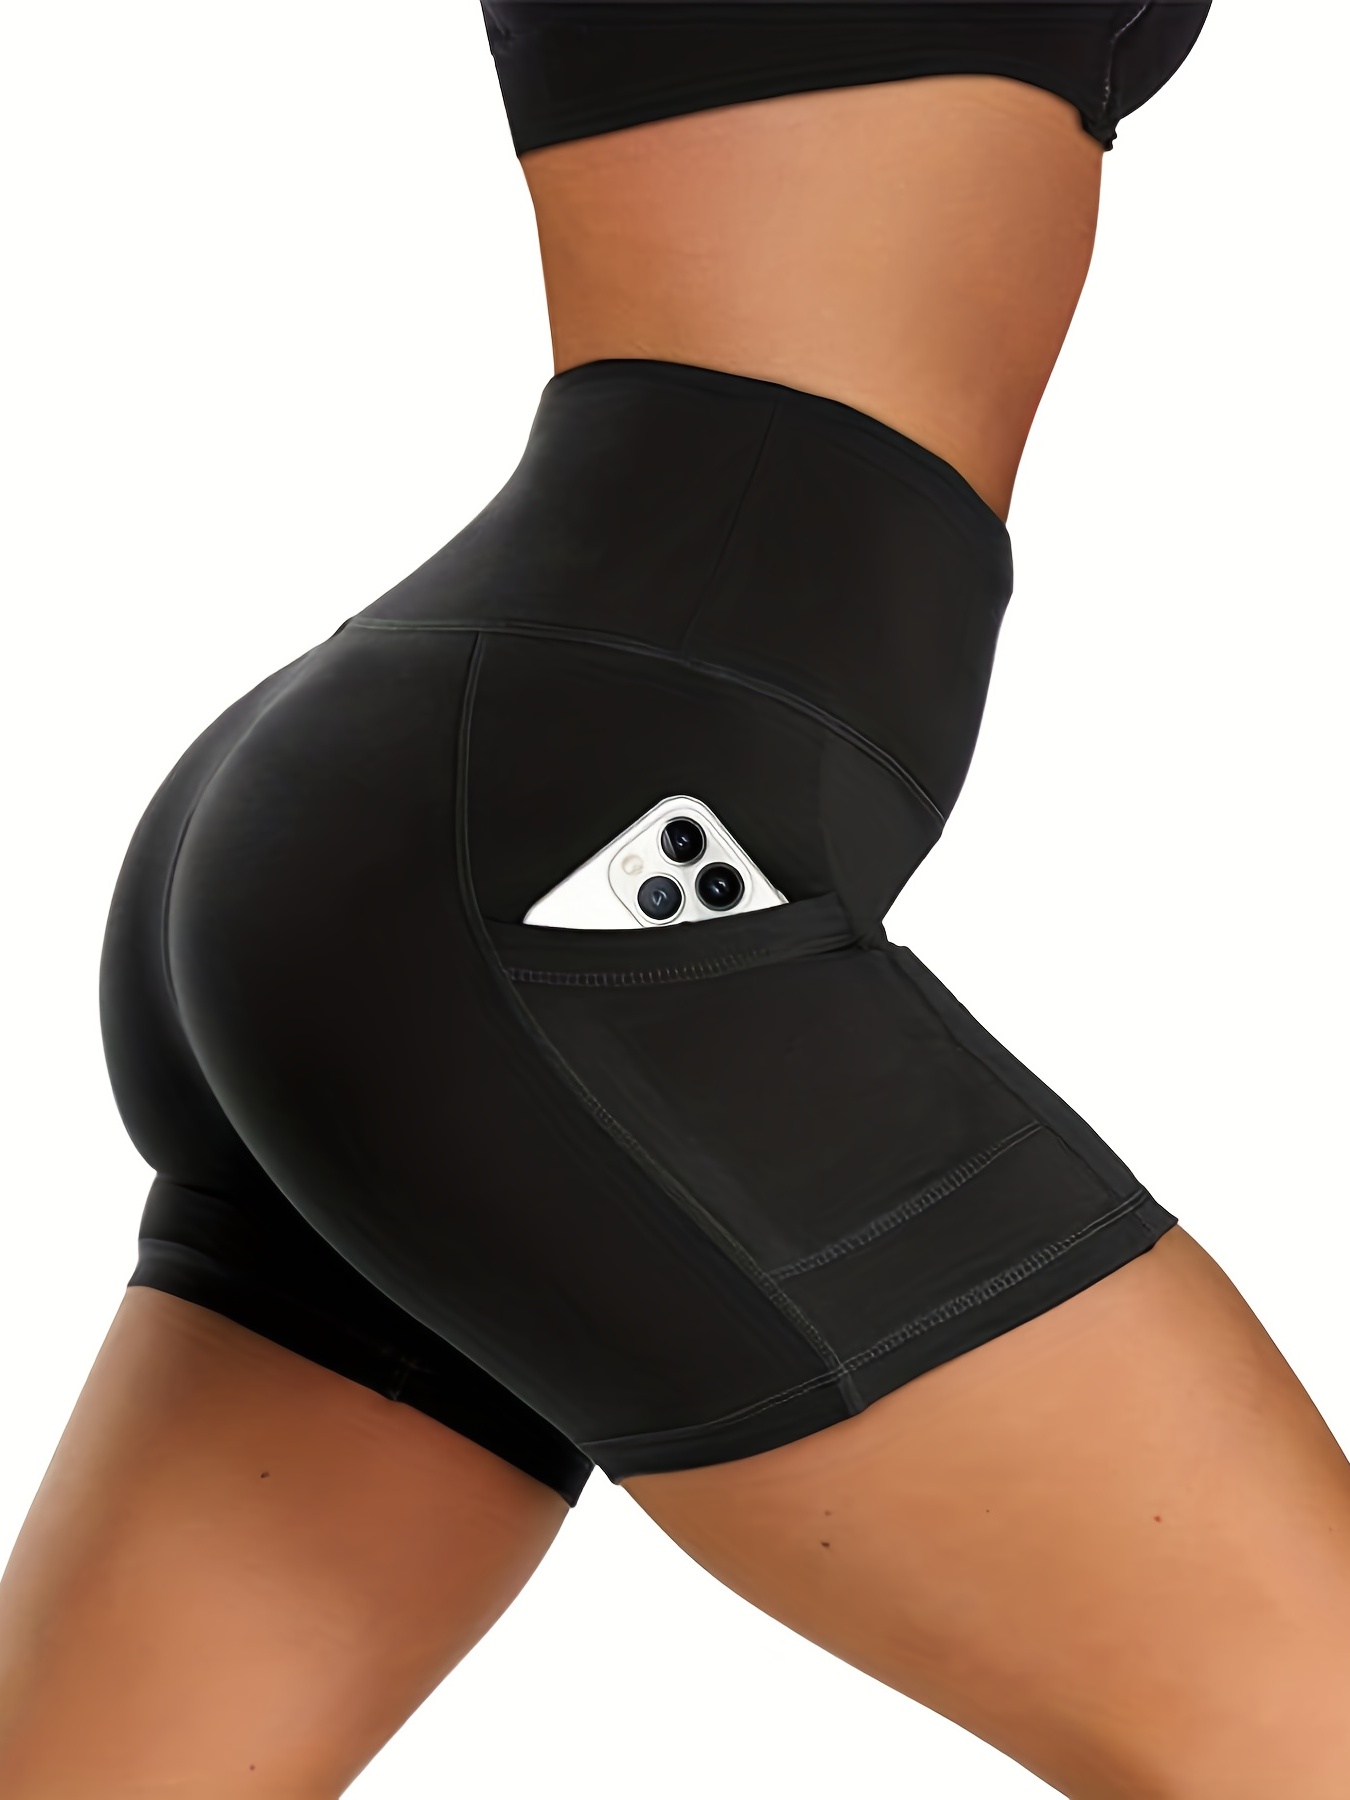 Biker Shorts for Women High Waist Tummy Control Bike Shorts for Gym Workout  Athletic Running Yoga Shorts Spandex Running Side Pockets 